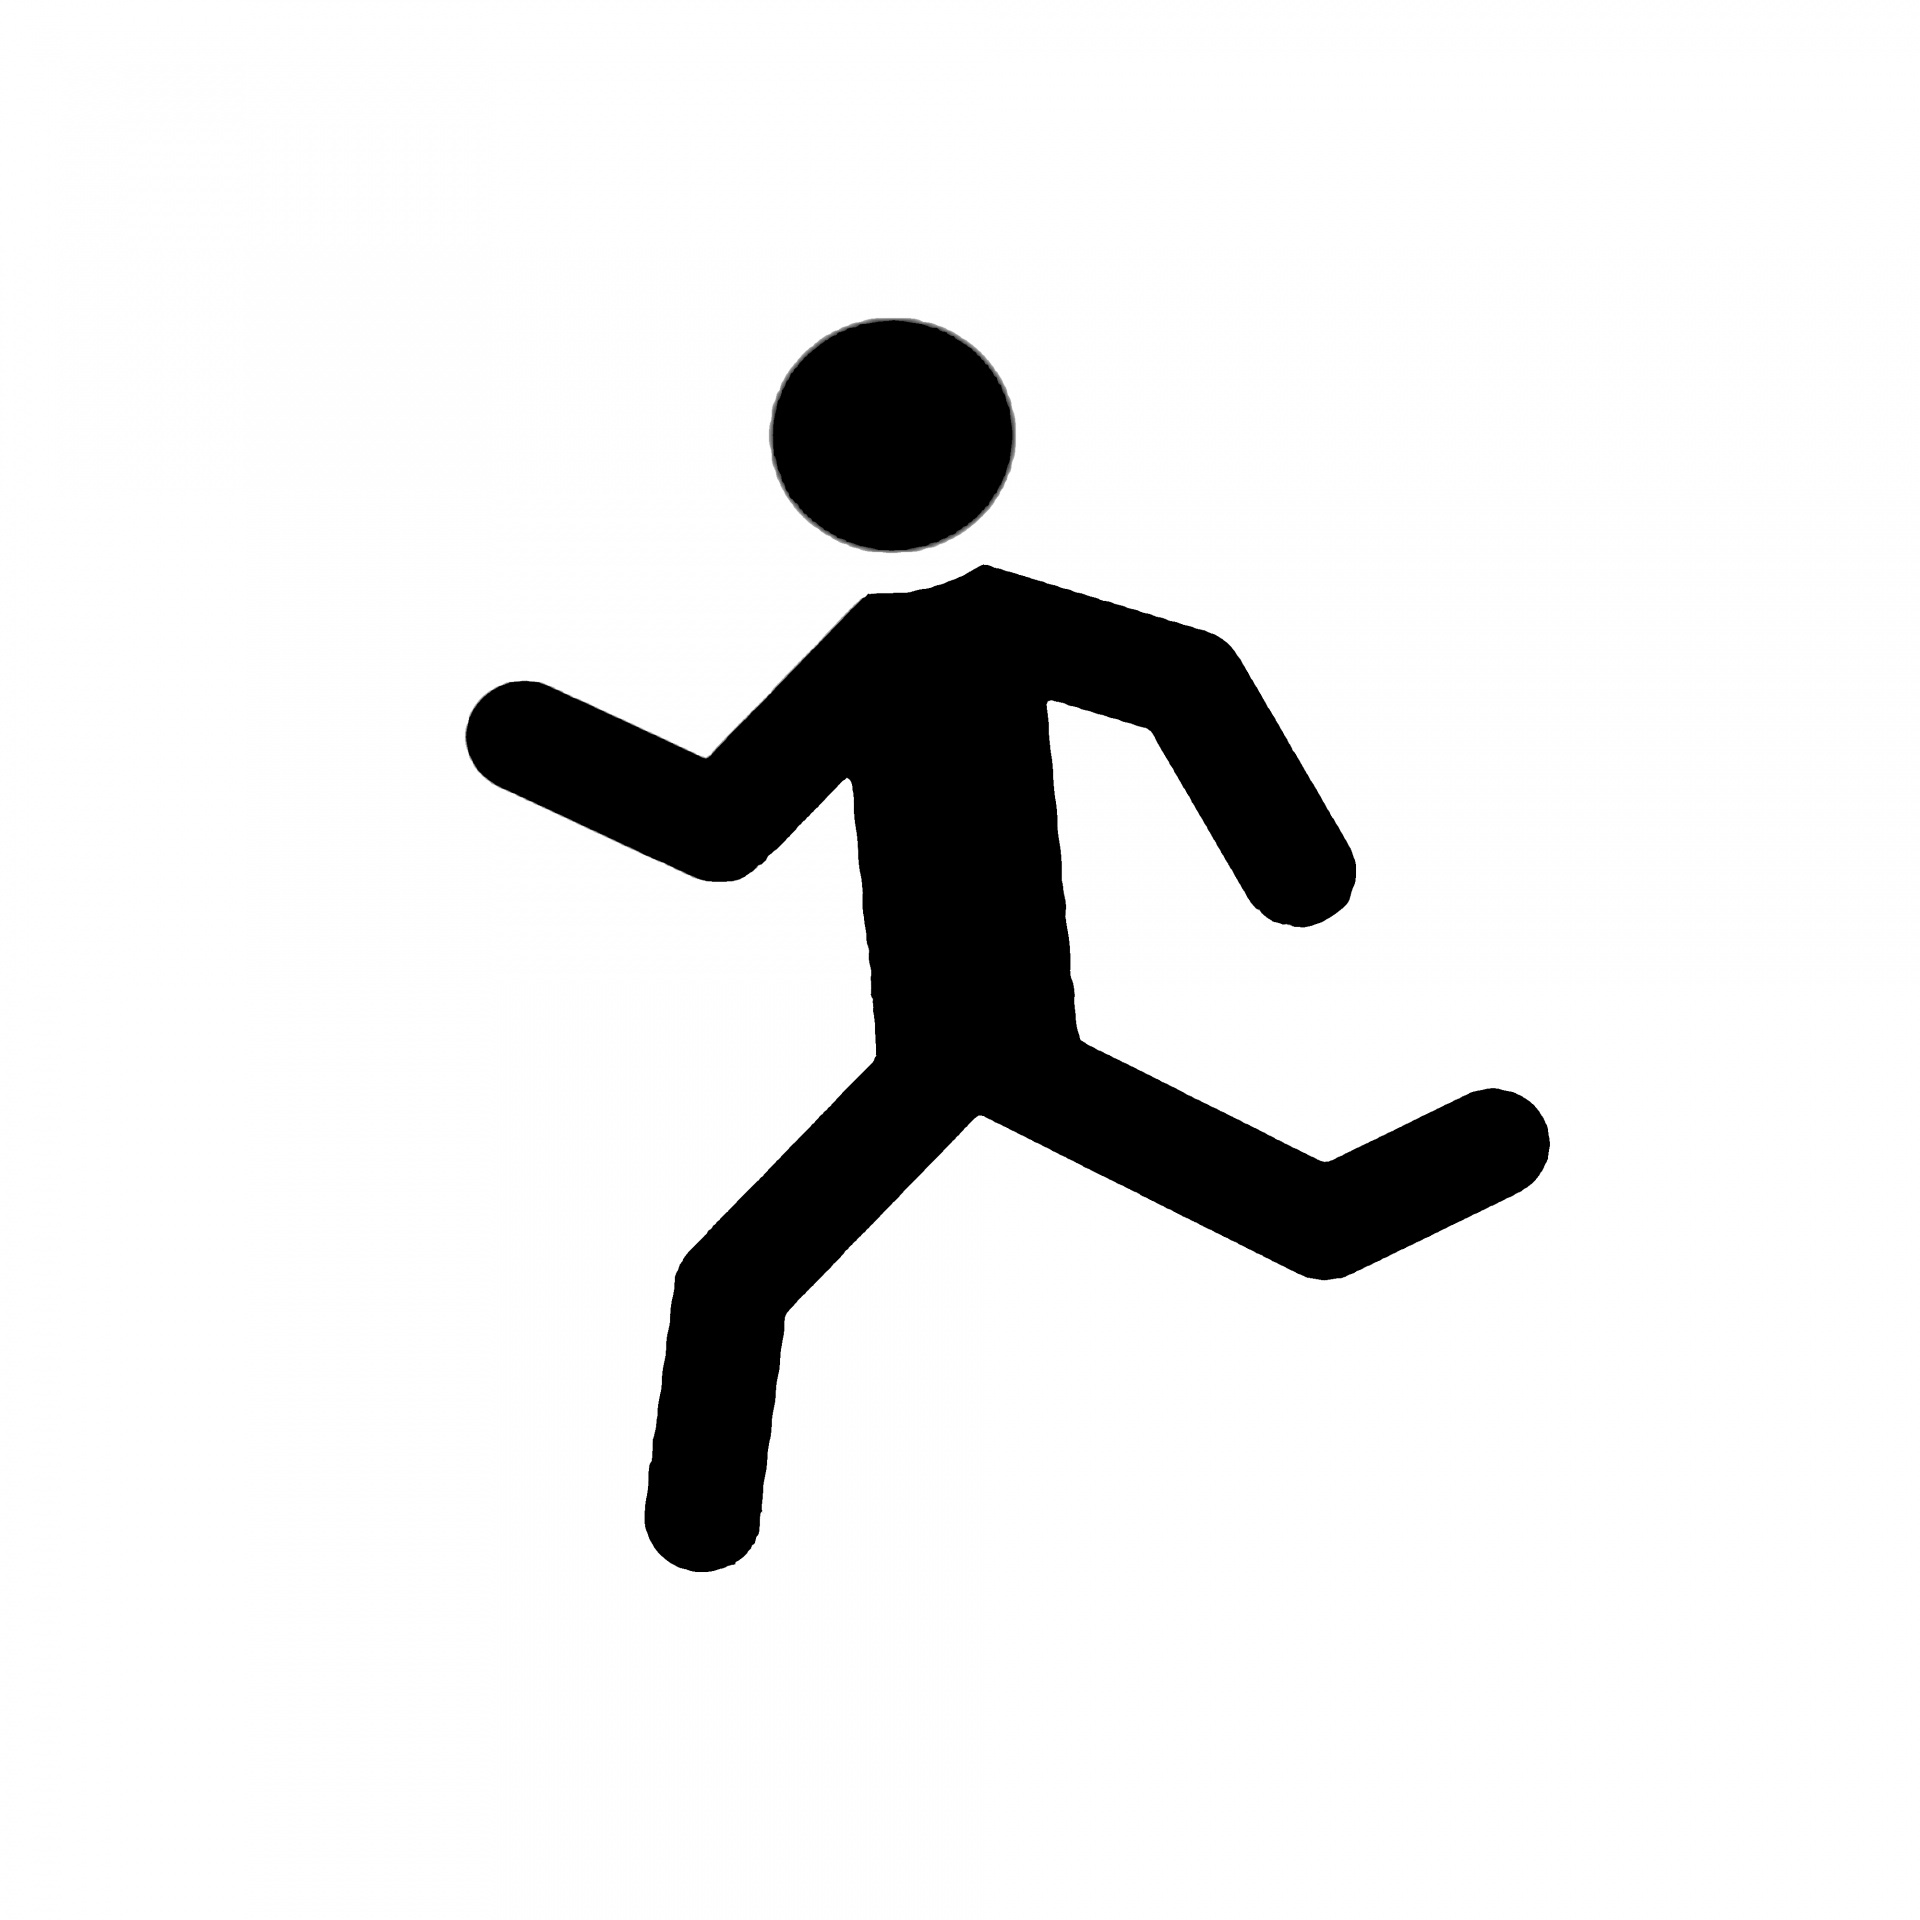 Фигурка бегущего человечка